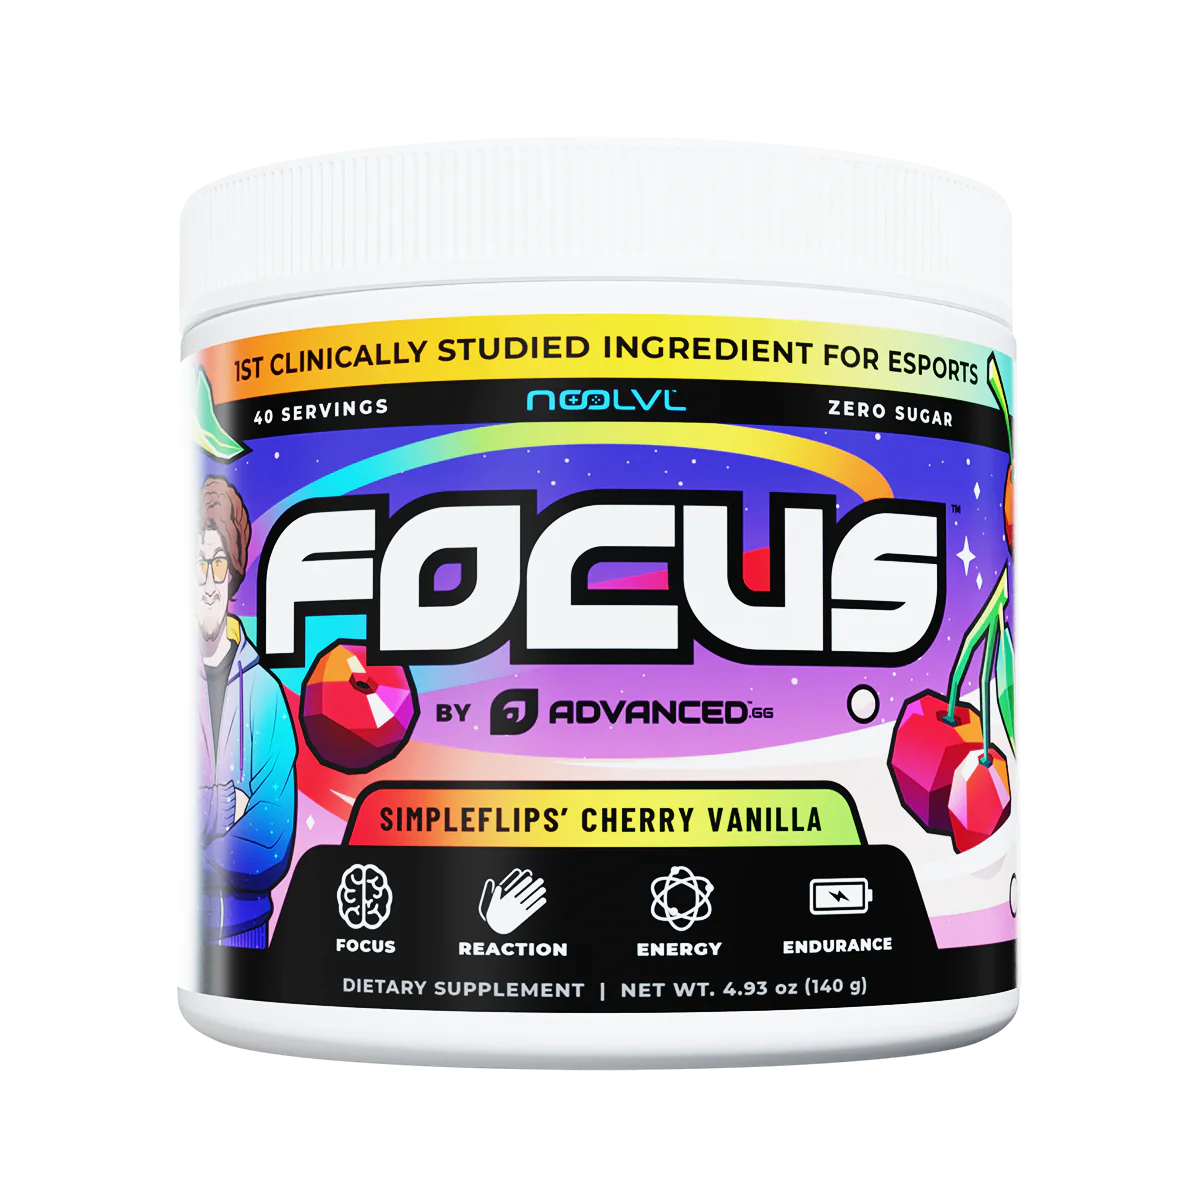 Focus 2.0 | Simpleflips' Cherry Vanilla